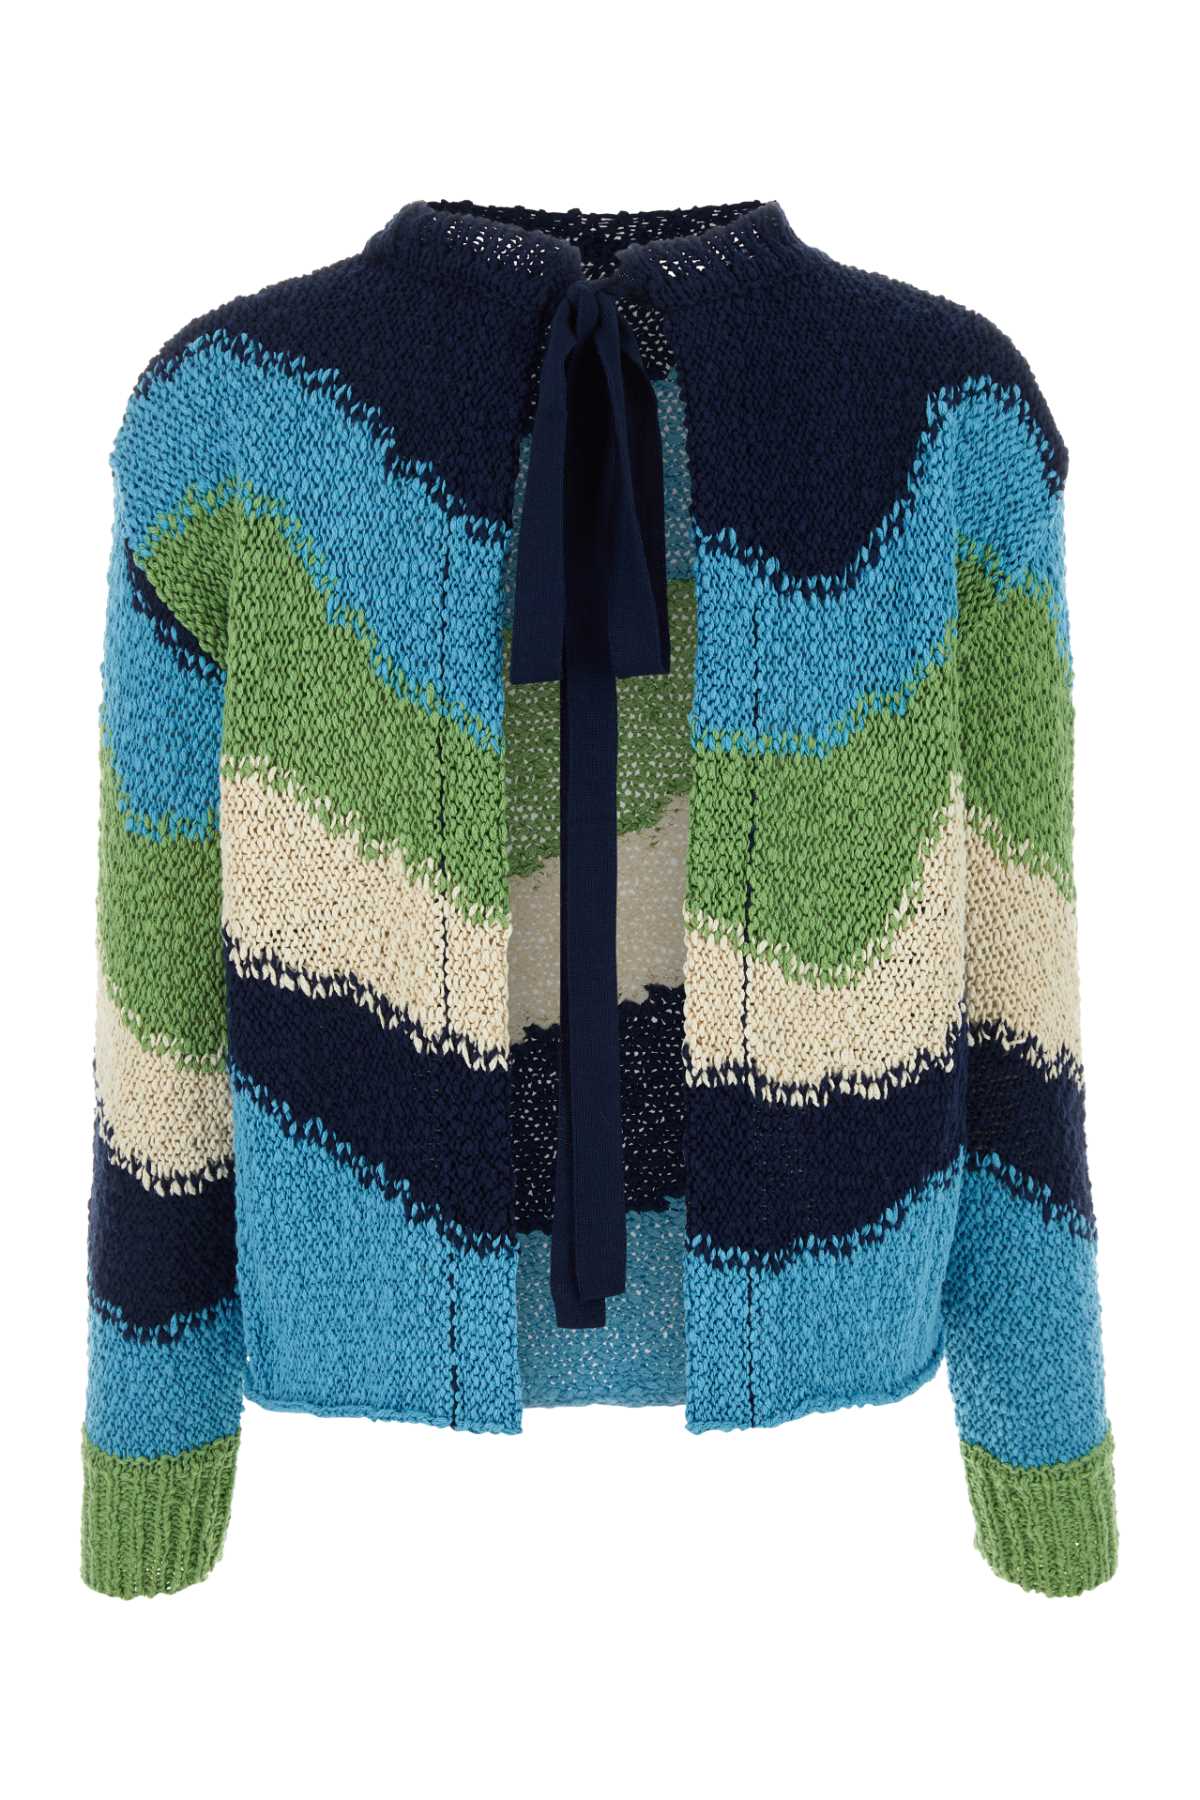 Marni Embroidered Cotton Sweater In Powderblue